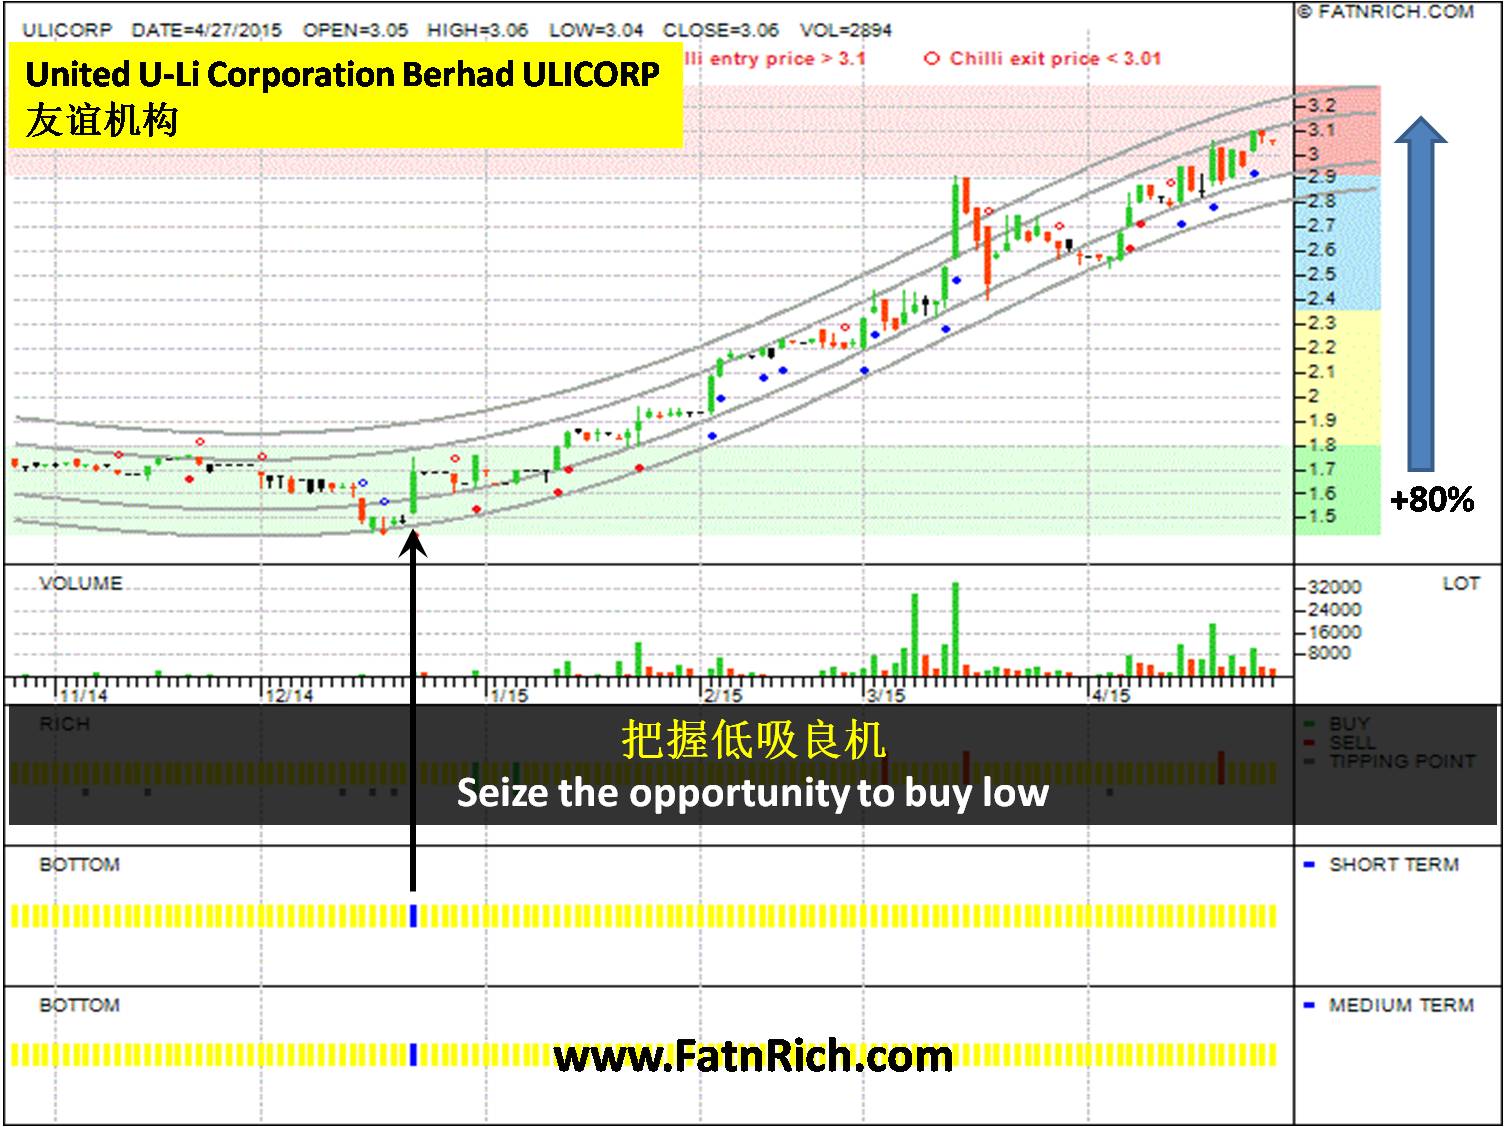 Ulicorp share price